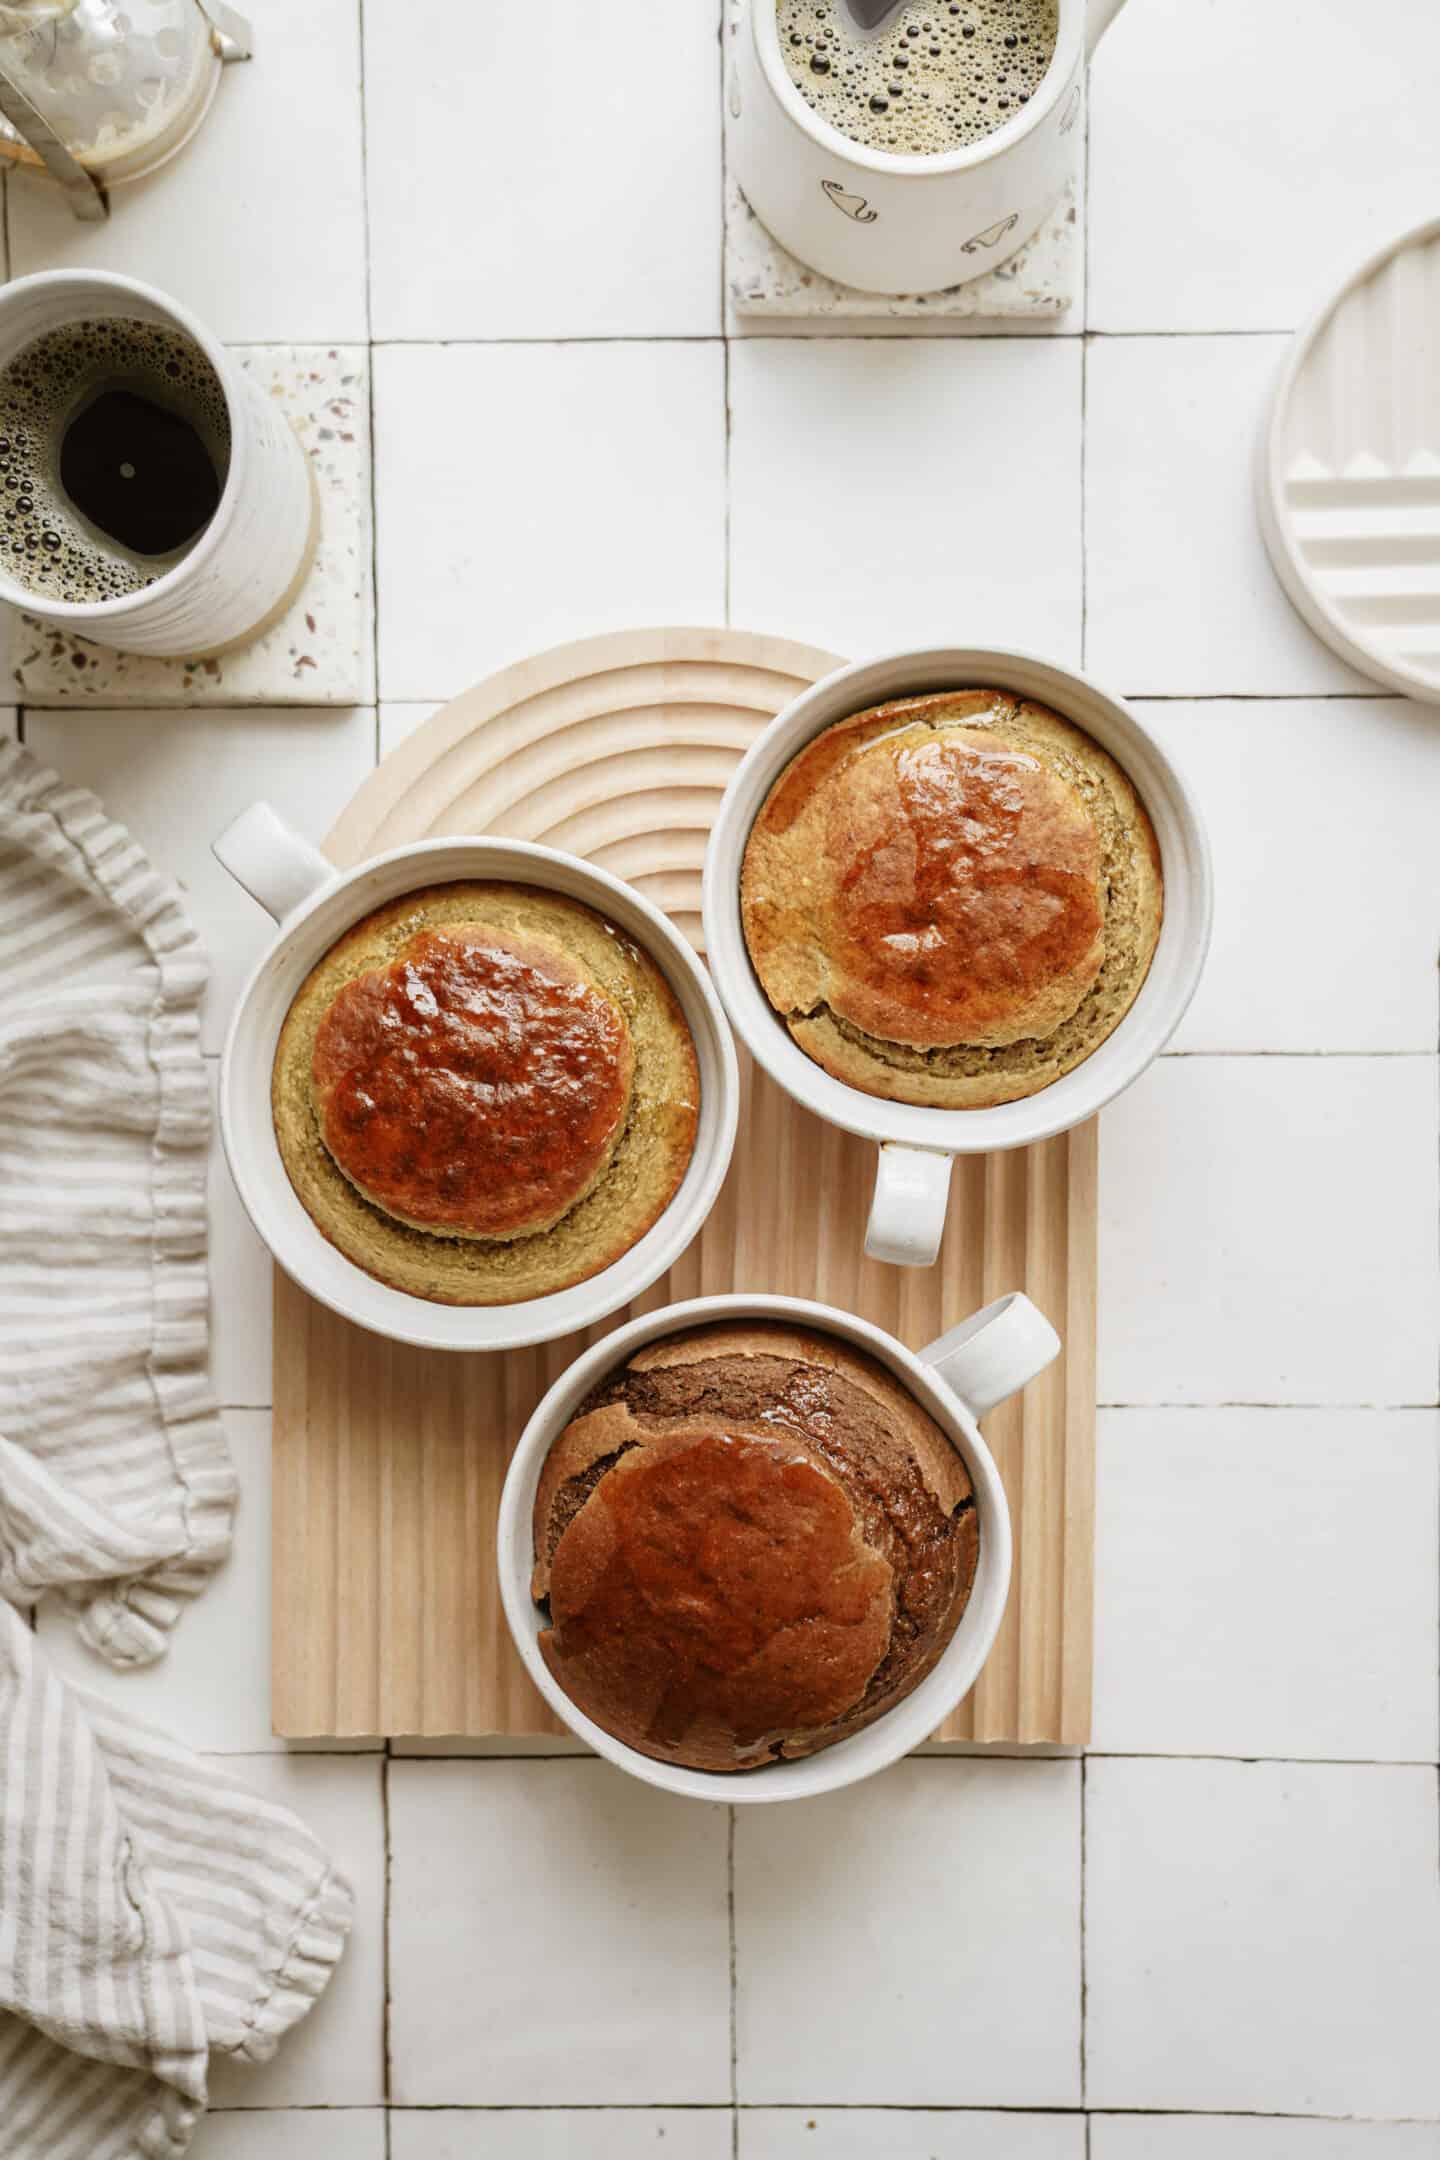 Baked oats recipe 3-ways in mugs on a cutting board